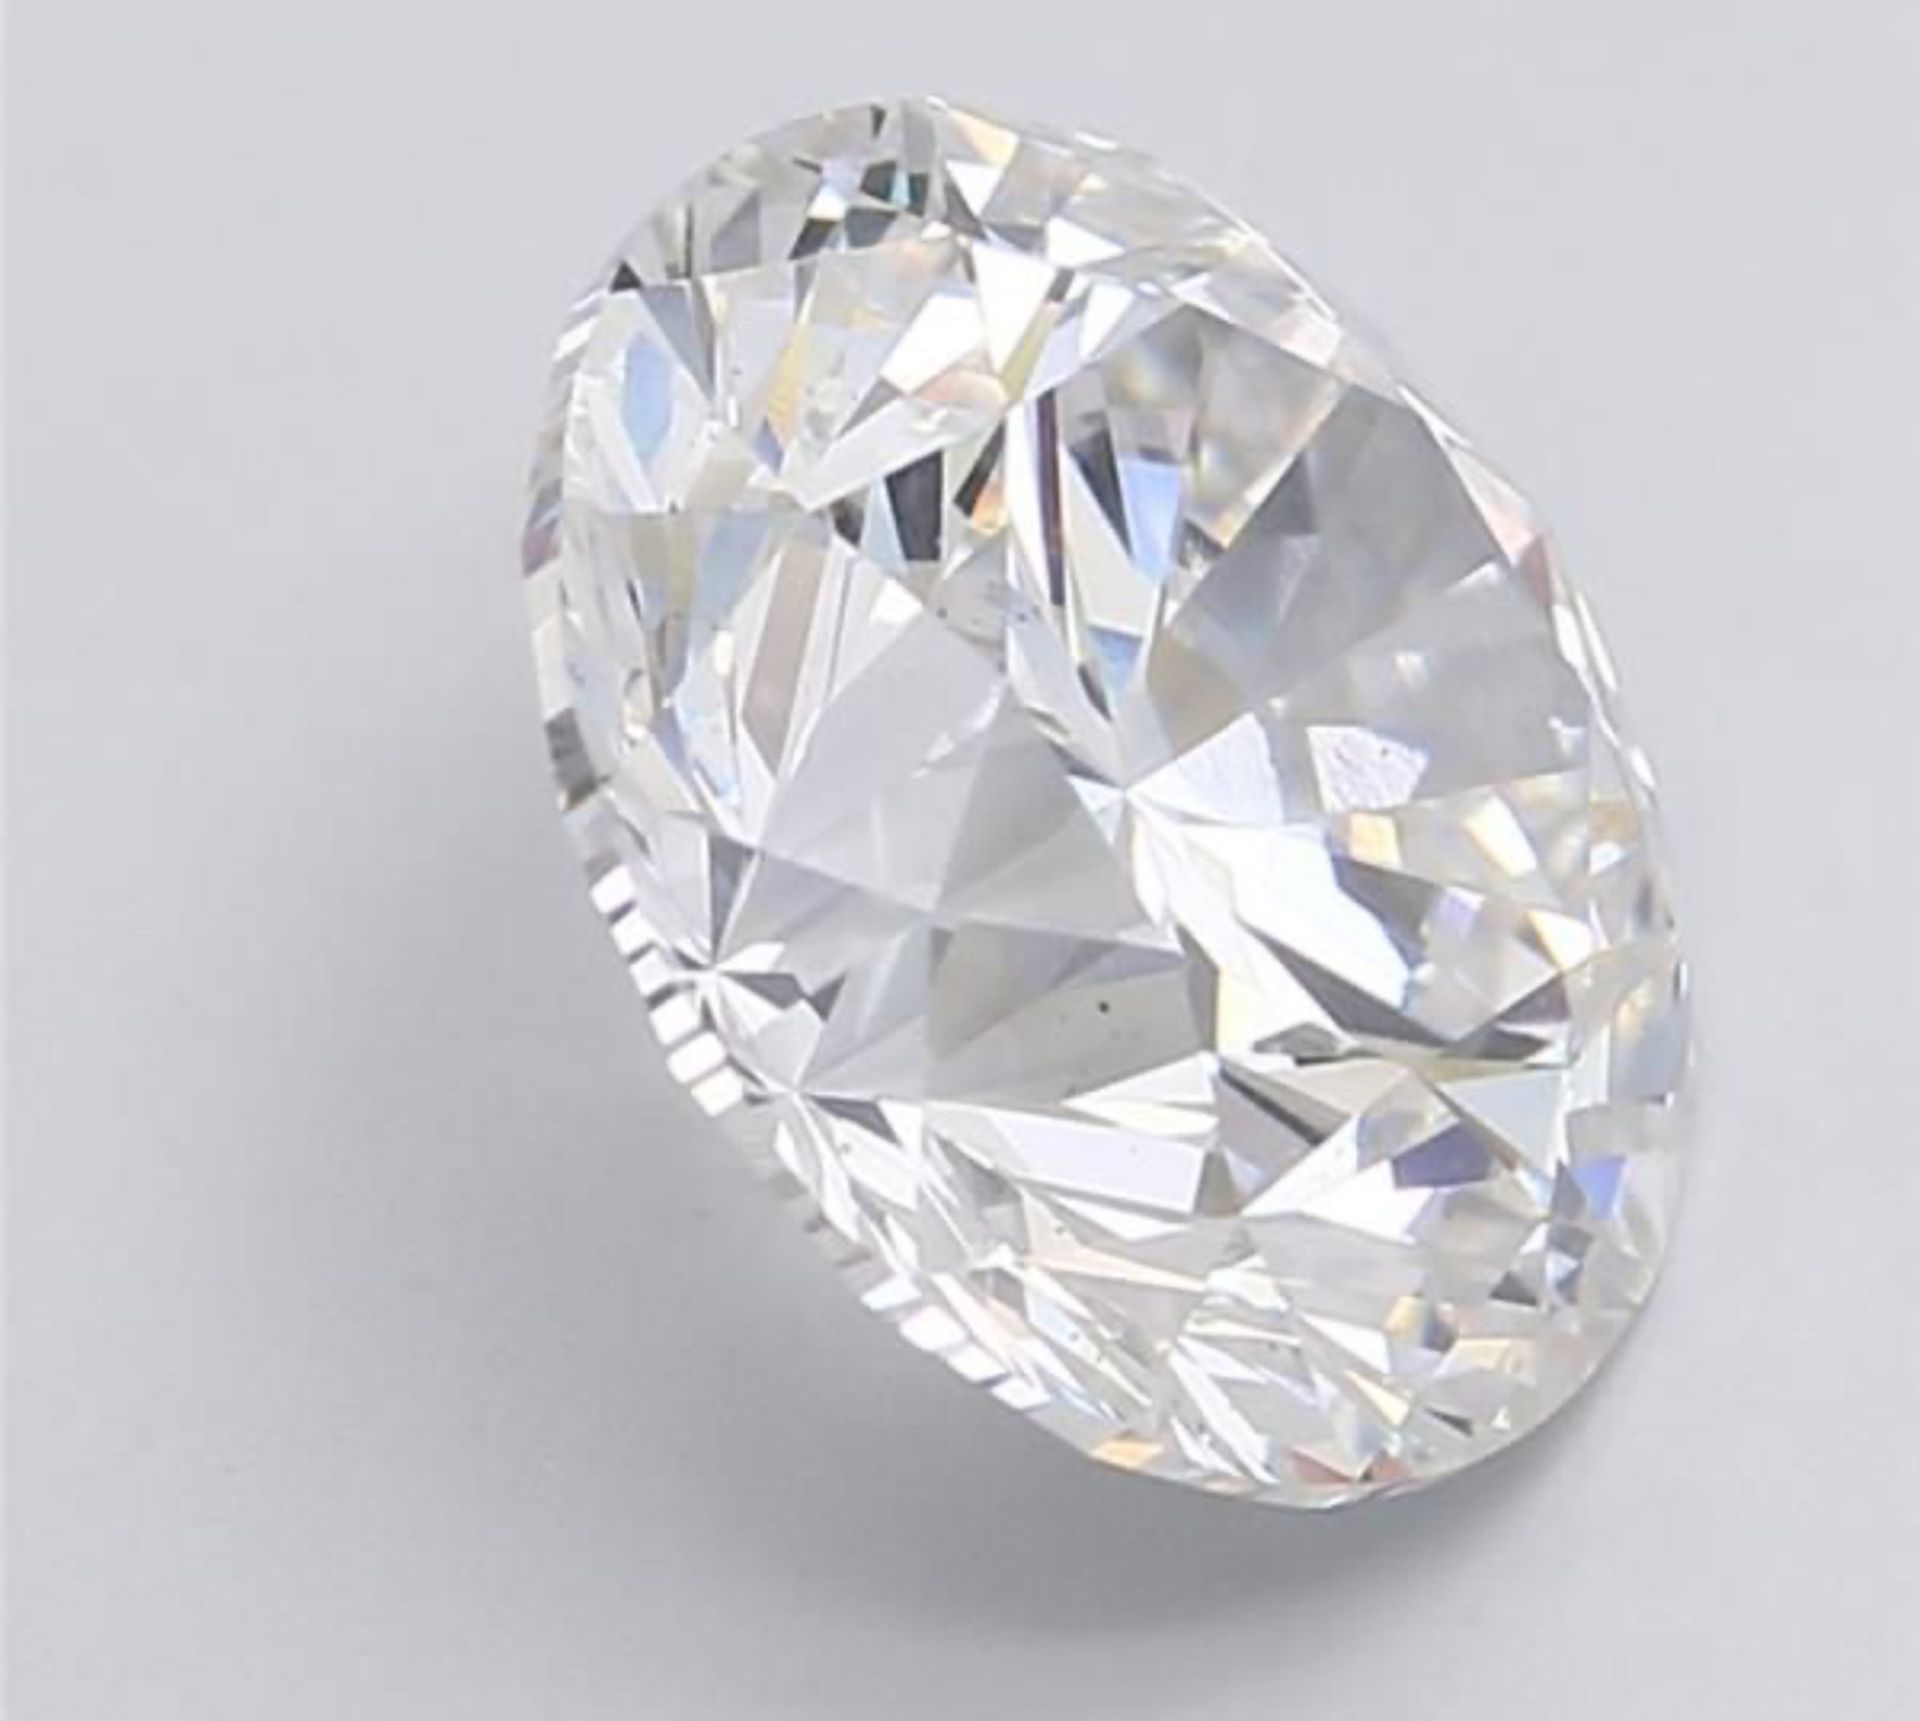 ** ON SALE ** Round Brilliant Cut Diamond 1.00 Carat D Colour VVS1 Clarity - IGI Certificate - Image 5 of 7